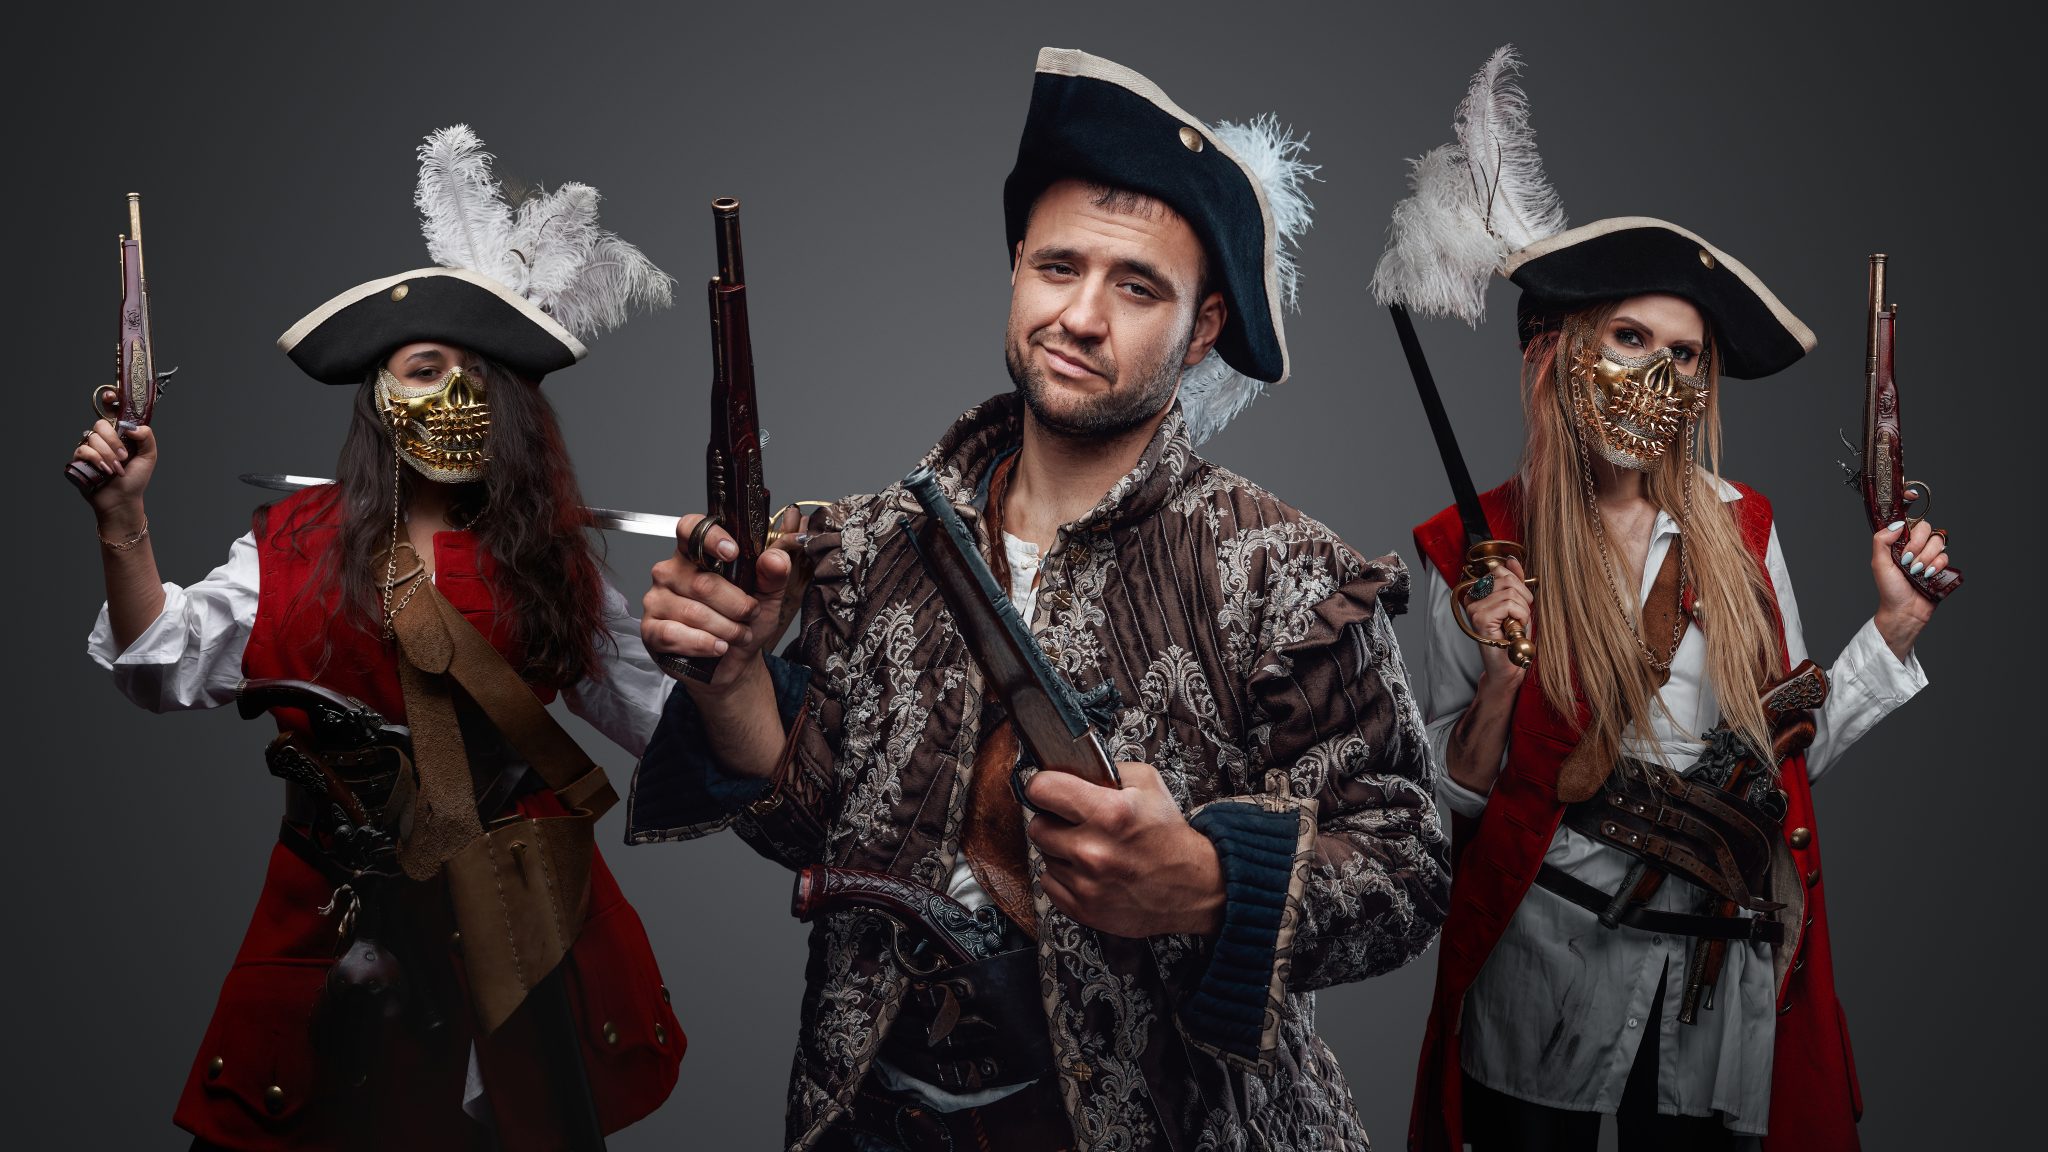 Buccaneer man with flintlock gun and two female pirates